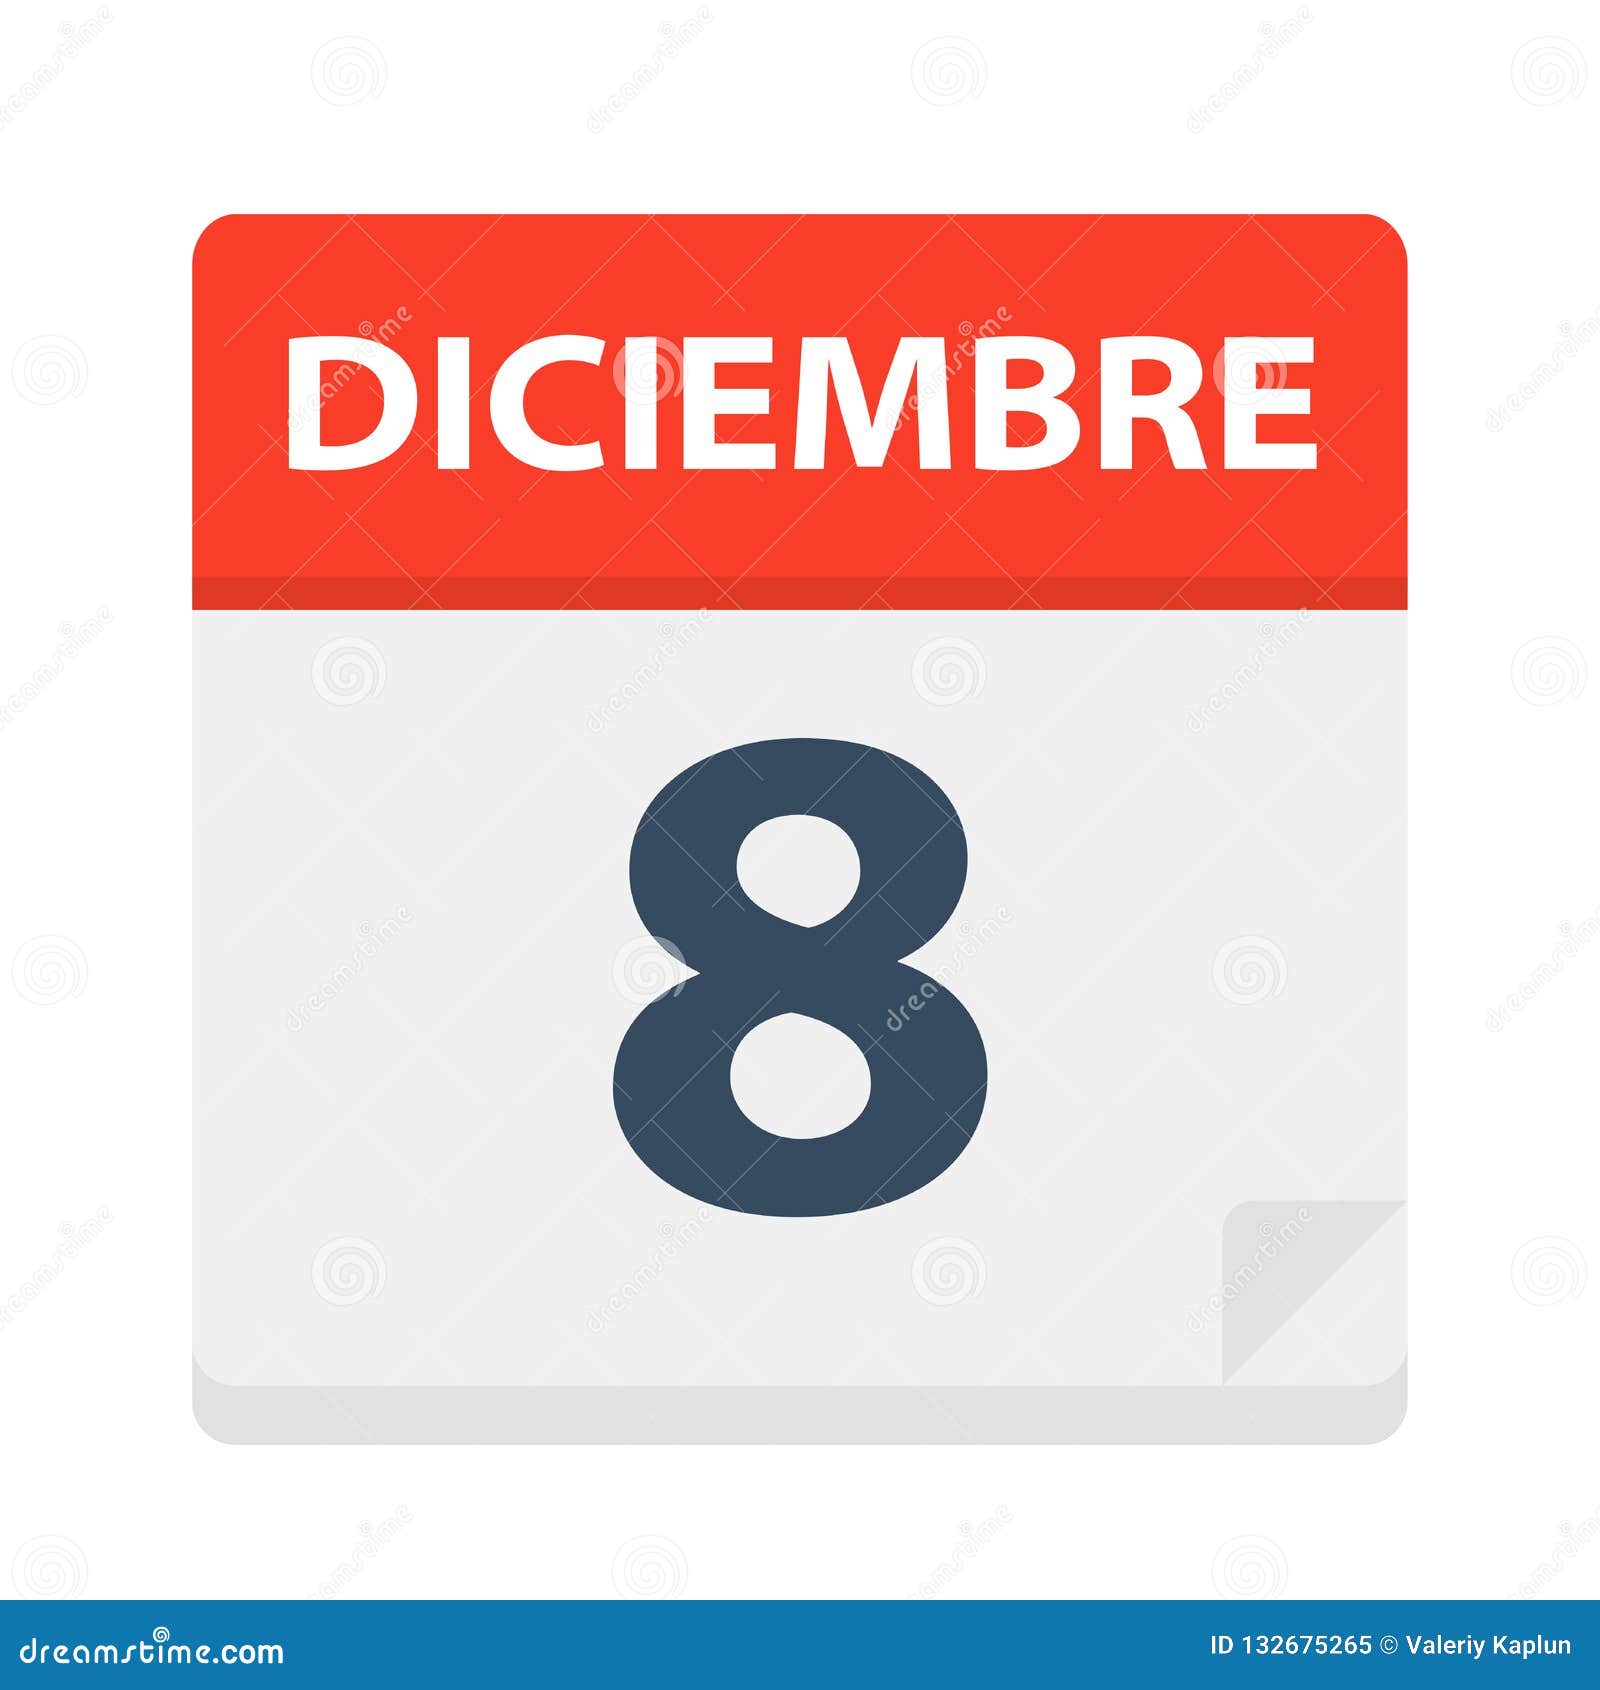 diciembre 8 - calendar icon - december 8.   of spanish calendar leaf